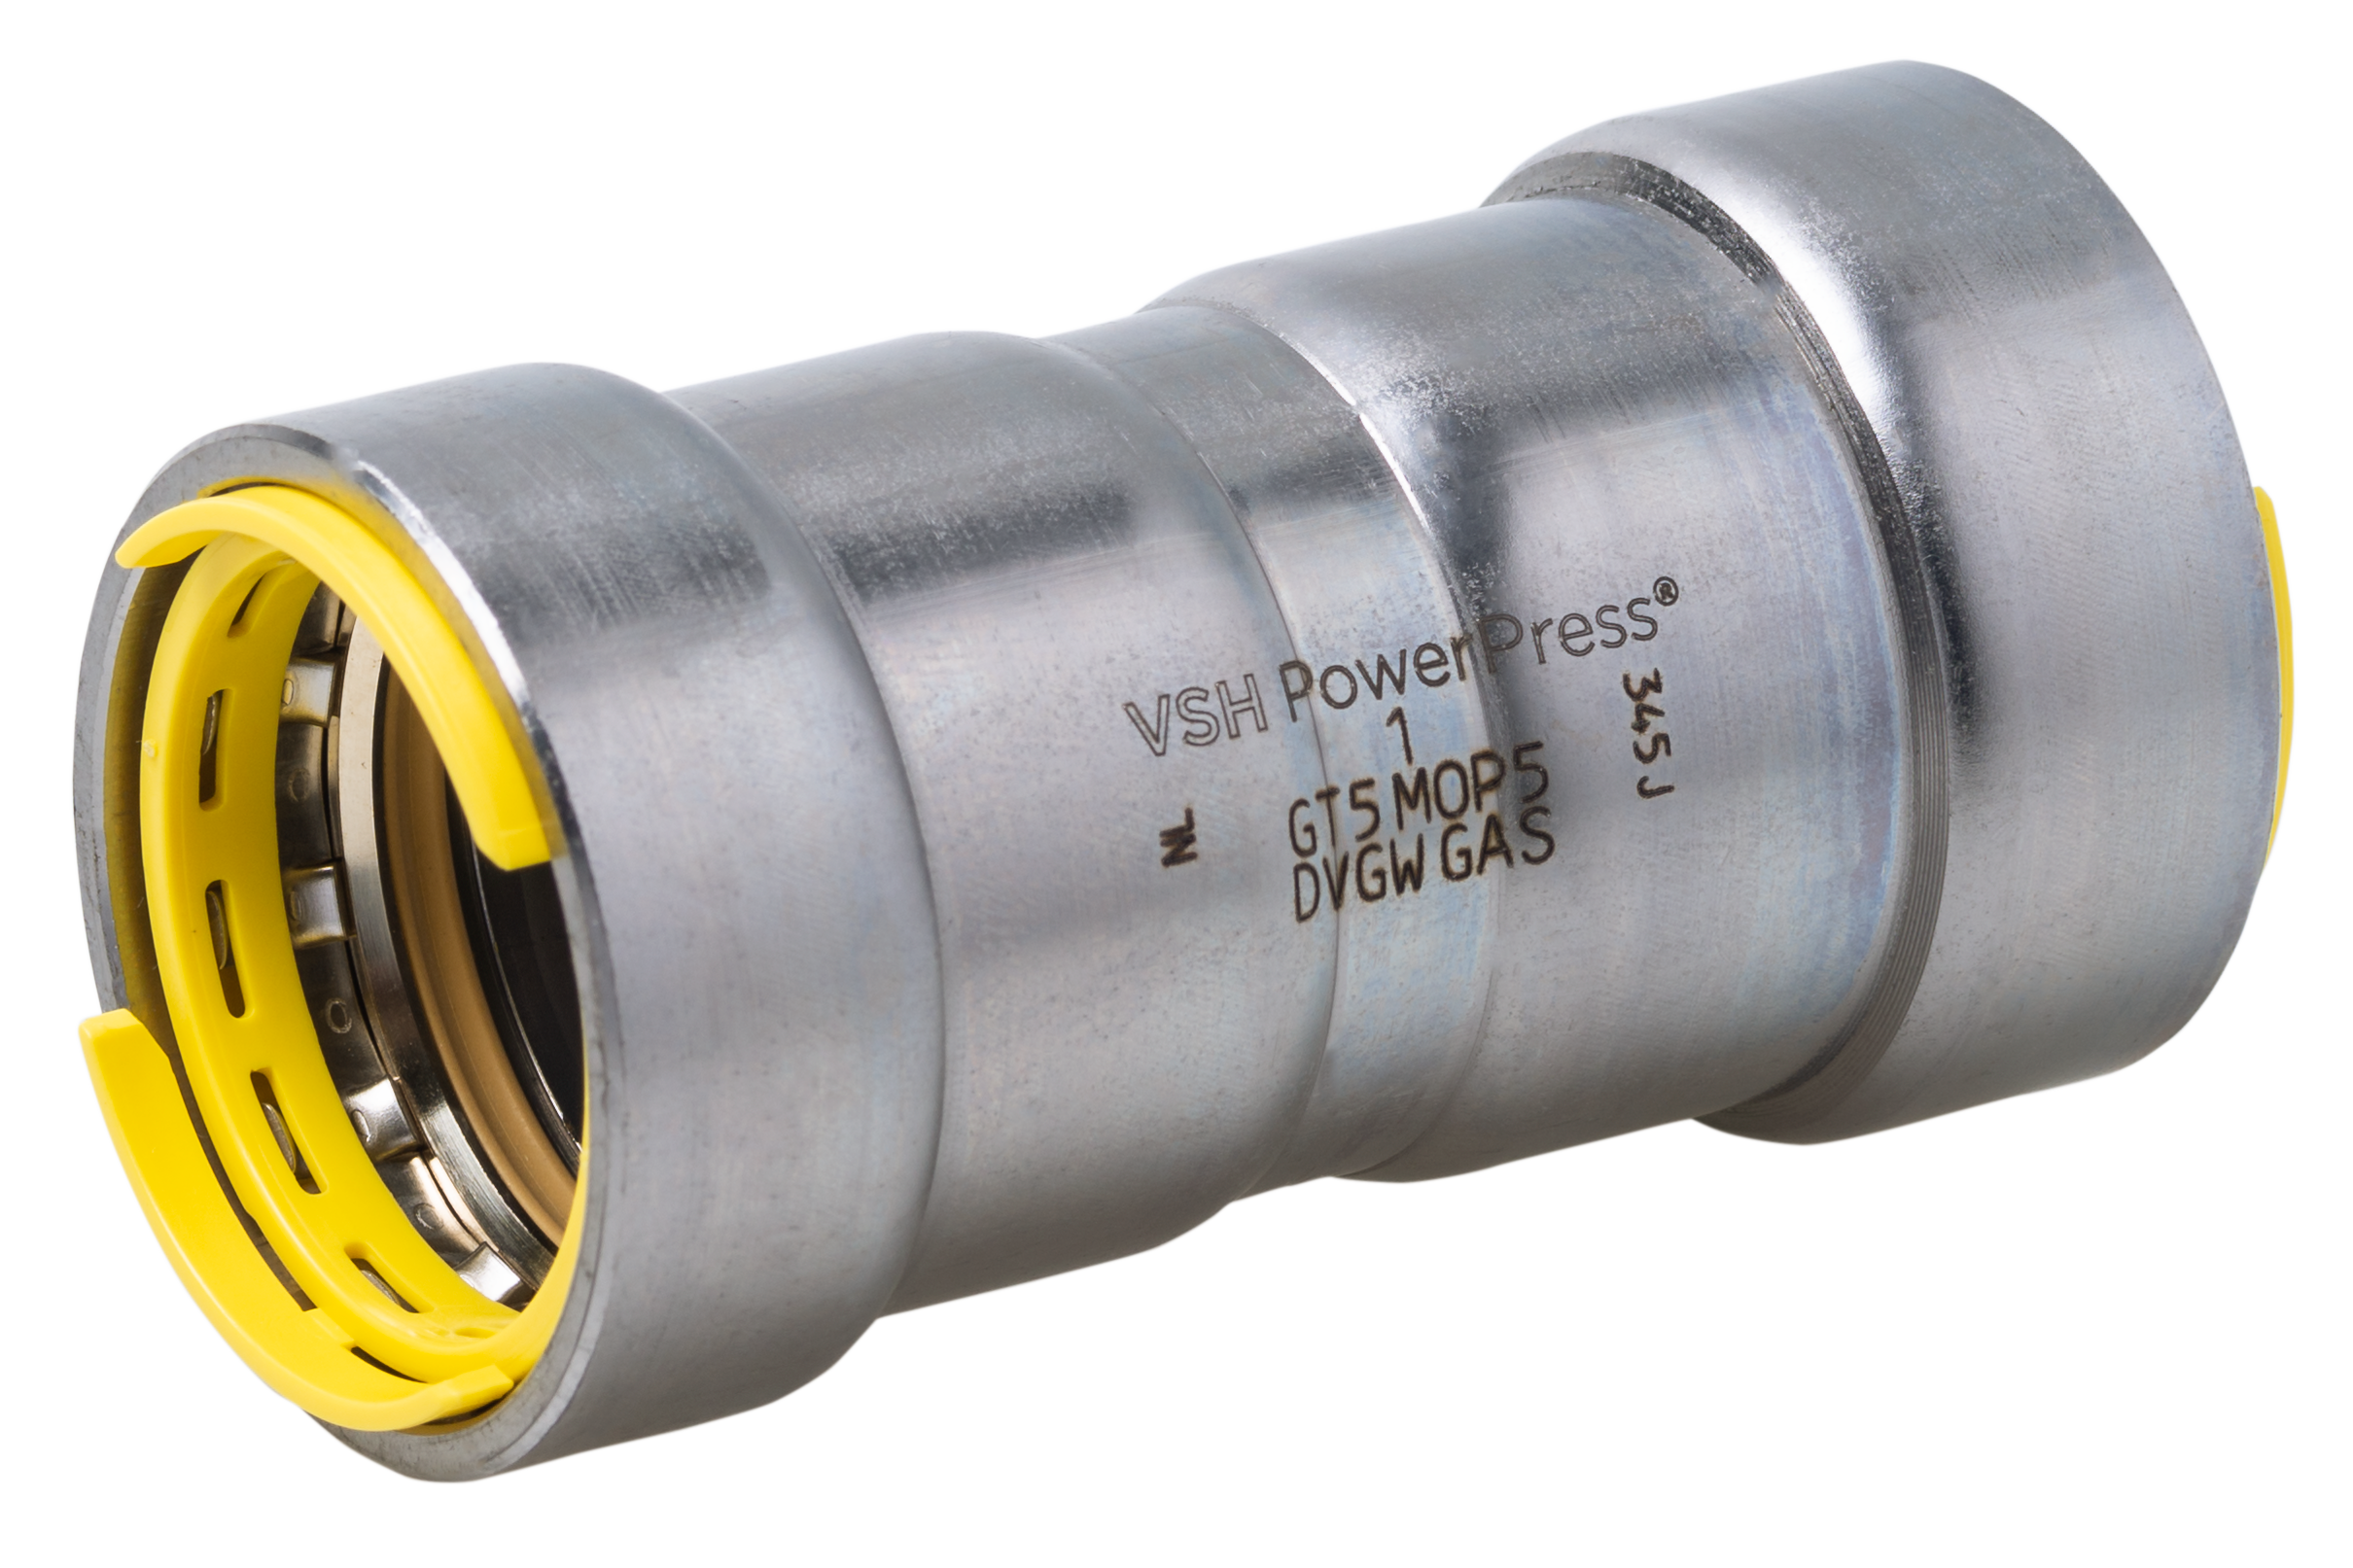 Preview image for VSH PowerPress Gas rechte koppeling (2 x press)